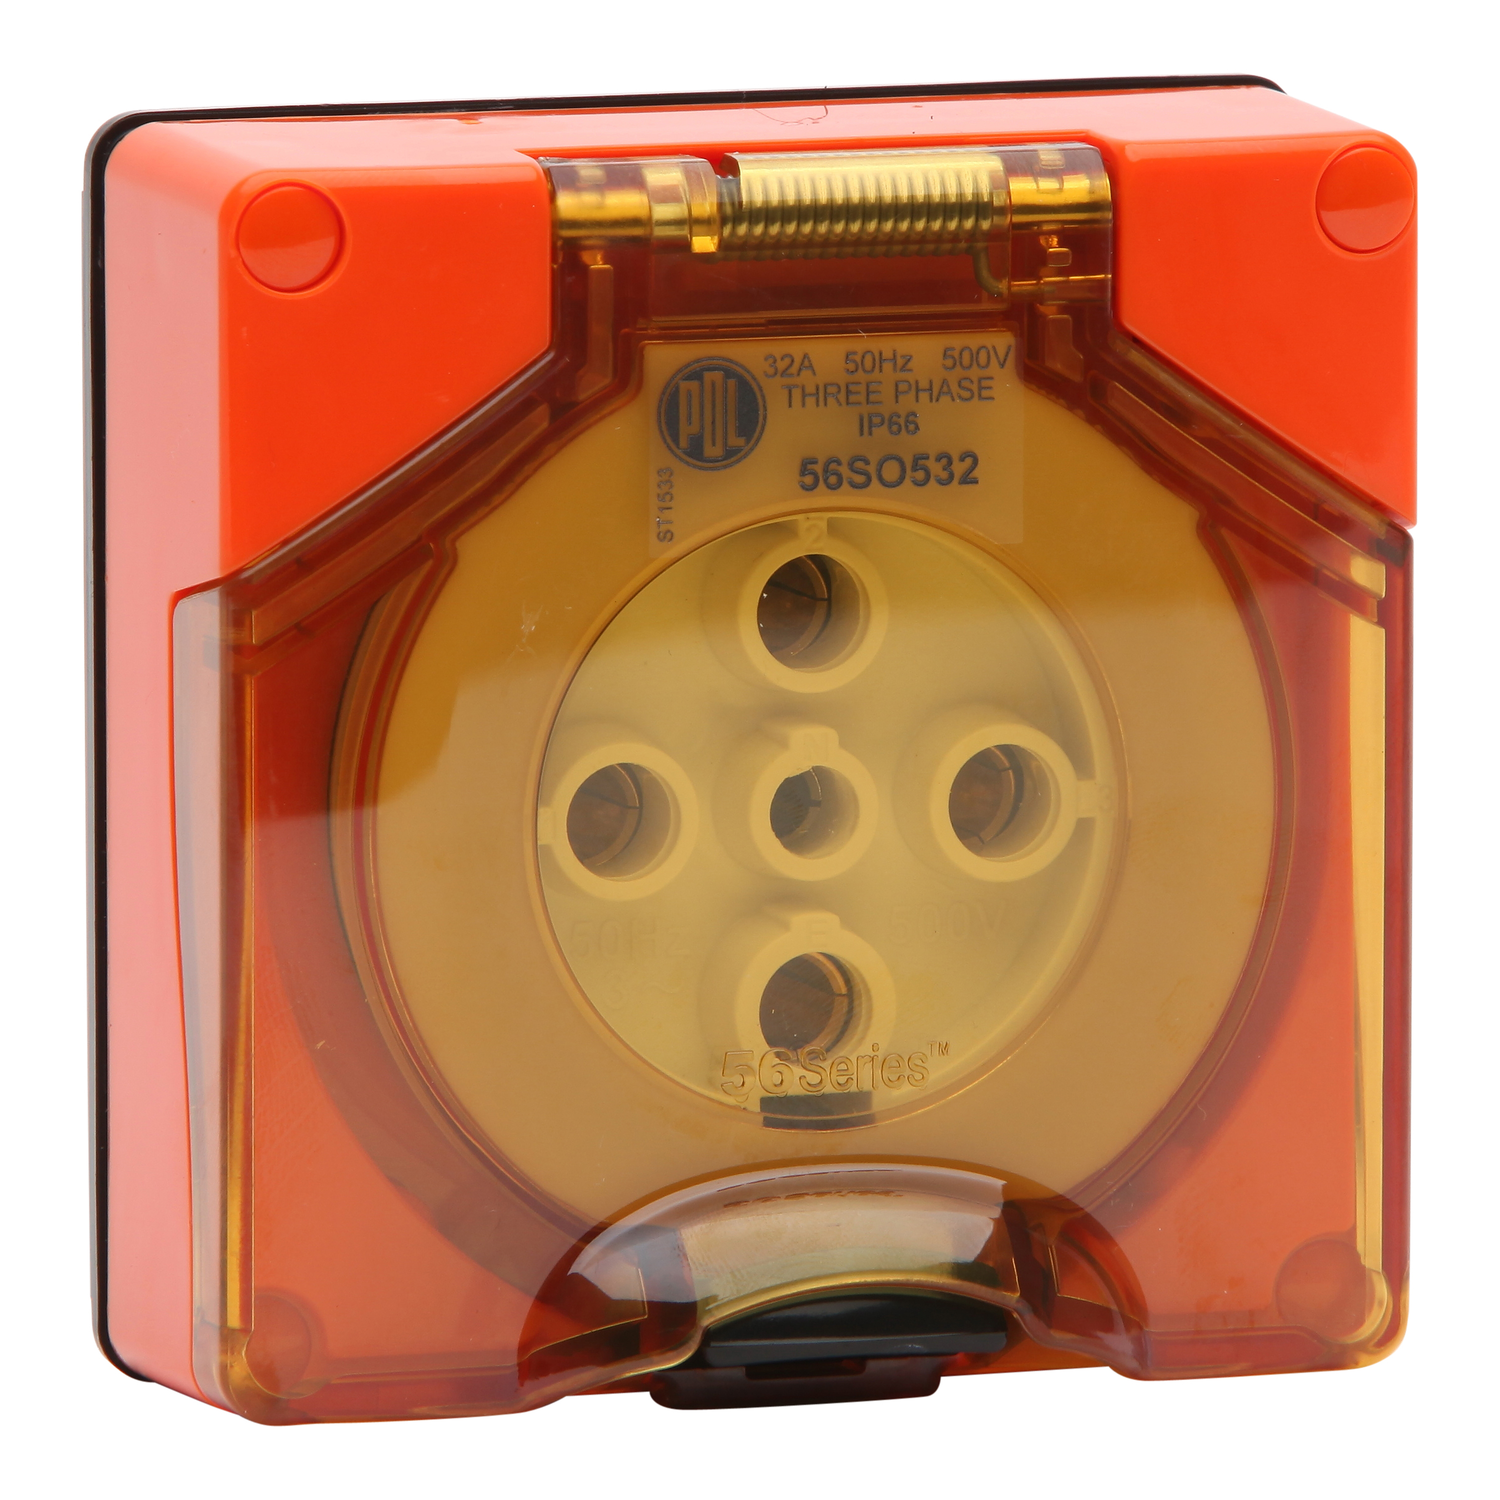 PDL 56 Series - Socket 32A 500V 3-Phase 5-Round Pin IP66 - Chemical-Resistant Orange